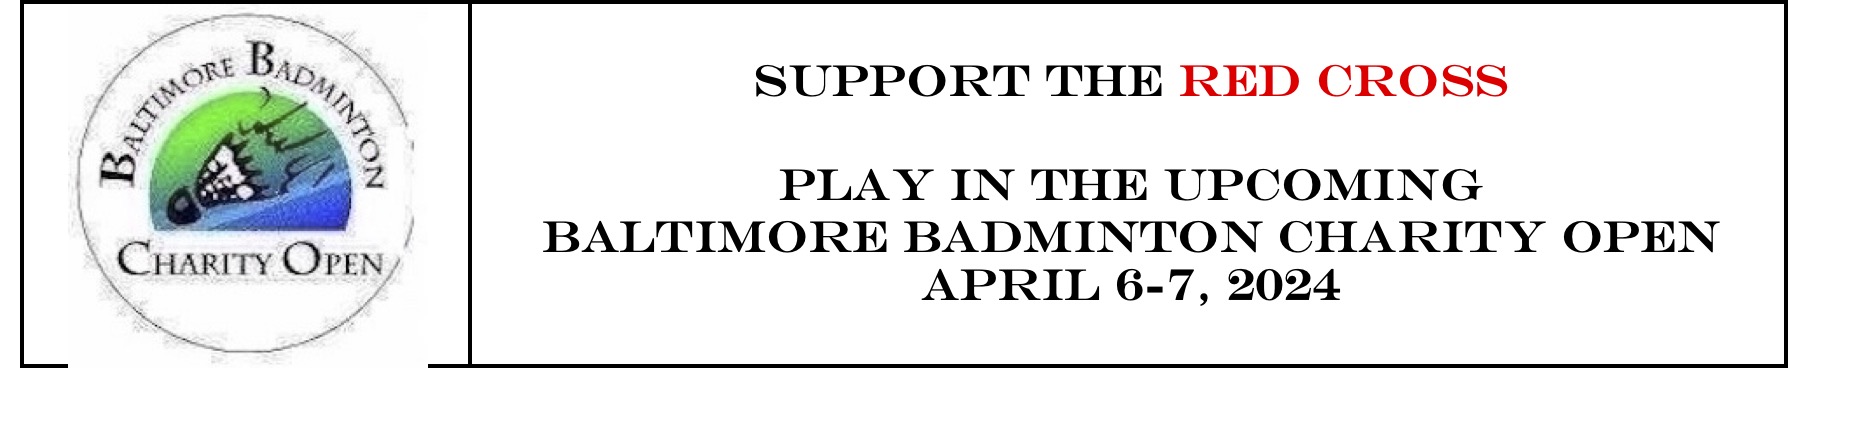 Baltimore Badminton Charity Open Banner